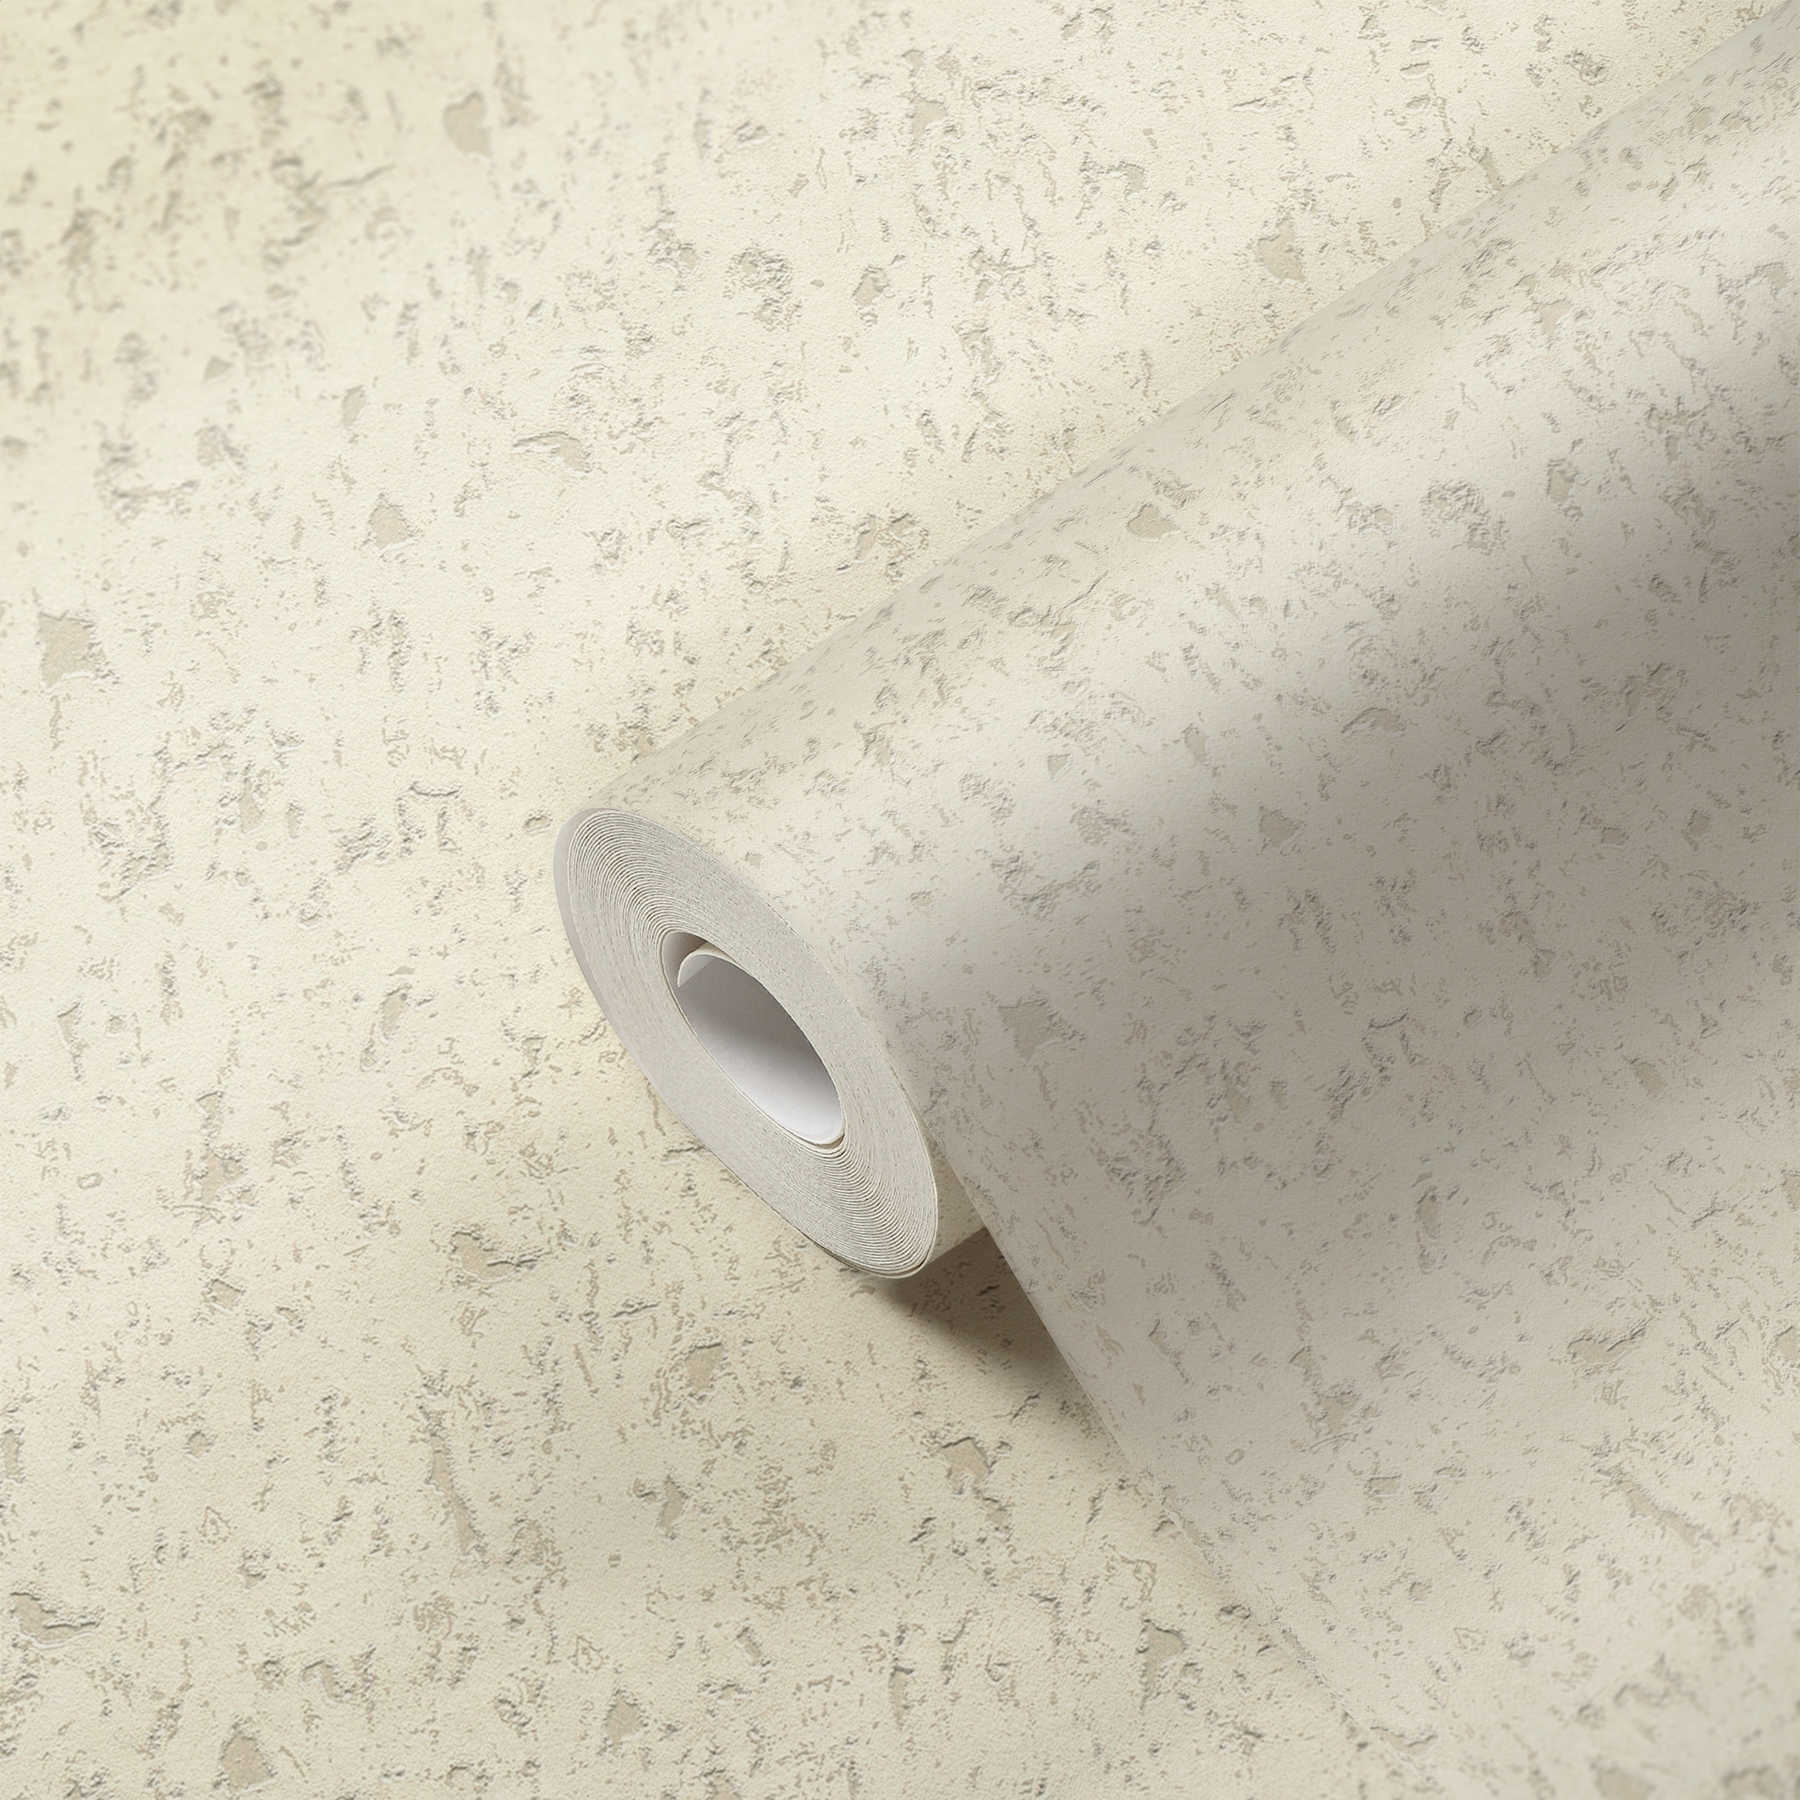             Non-woven wallpaper cork look with metallic effect - grey, white
        